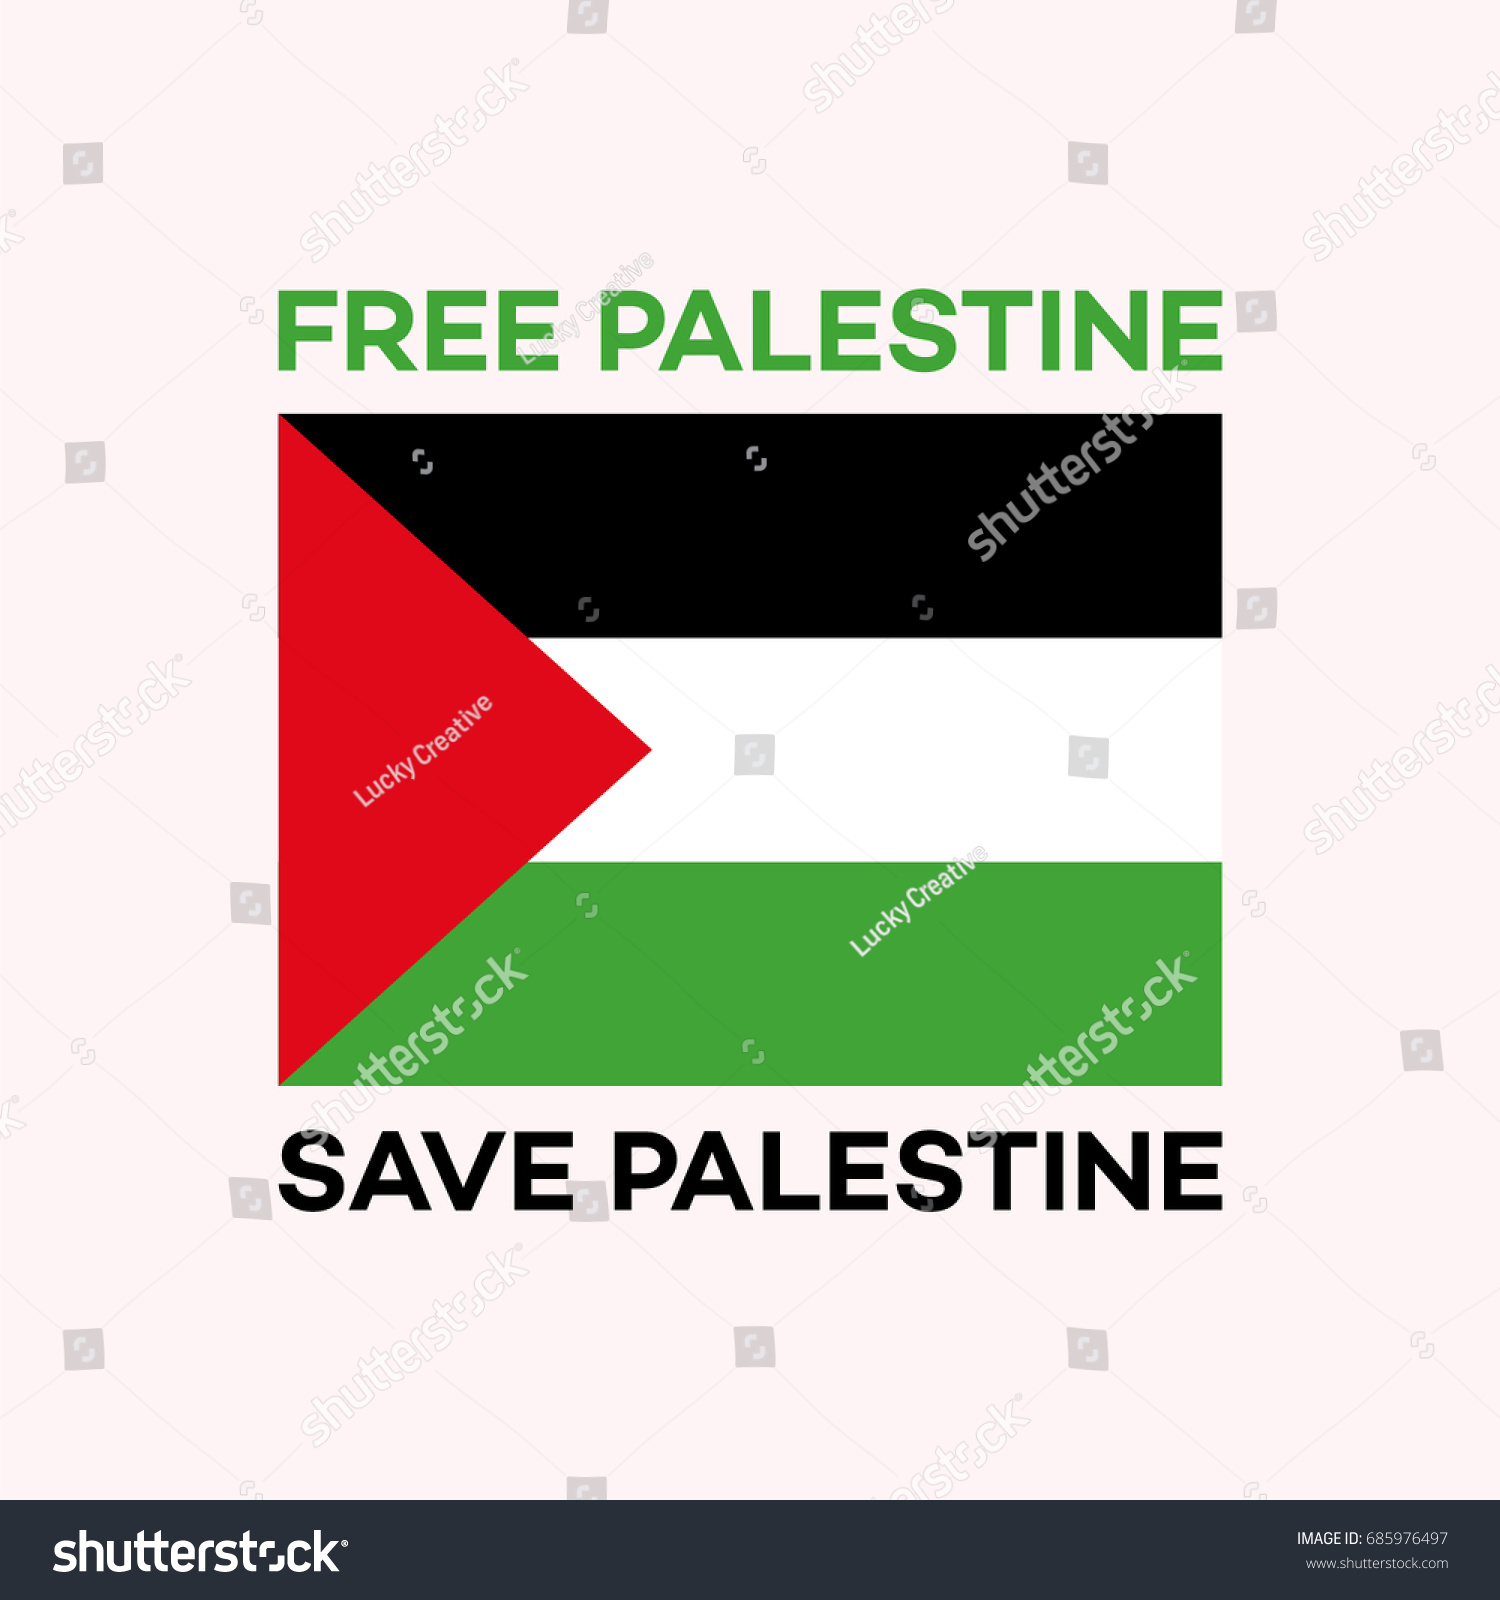 Palestine wallpaper